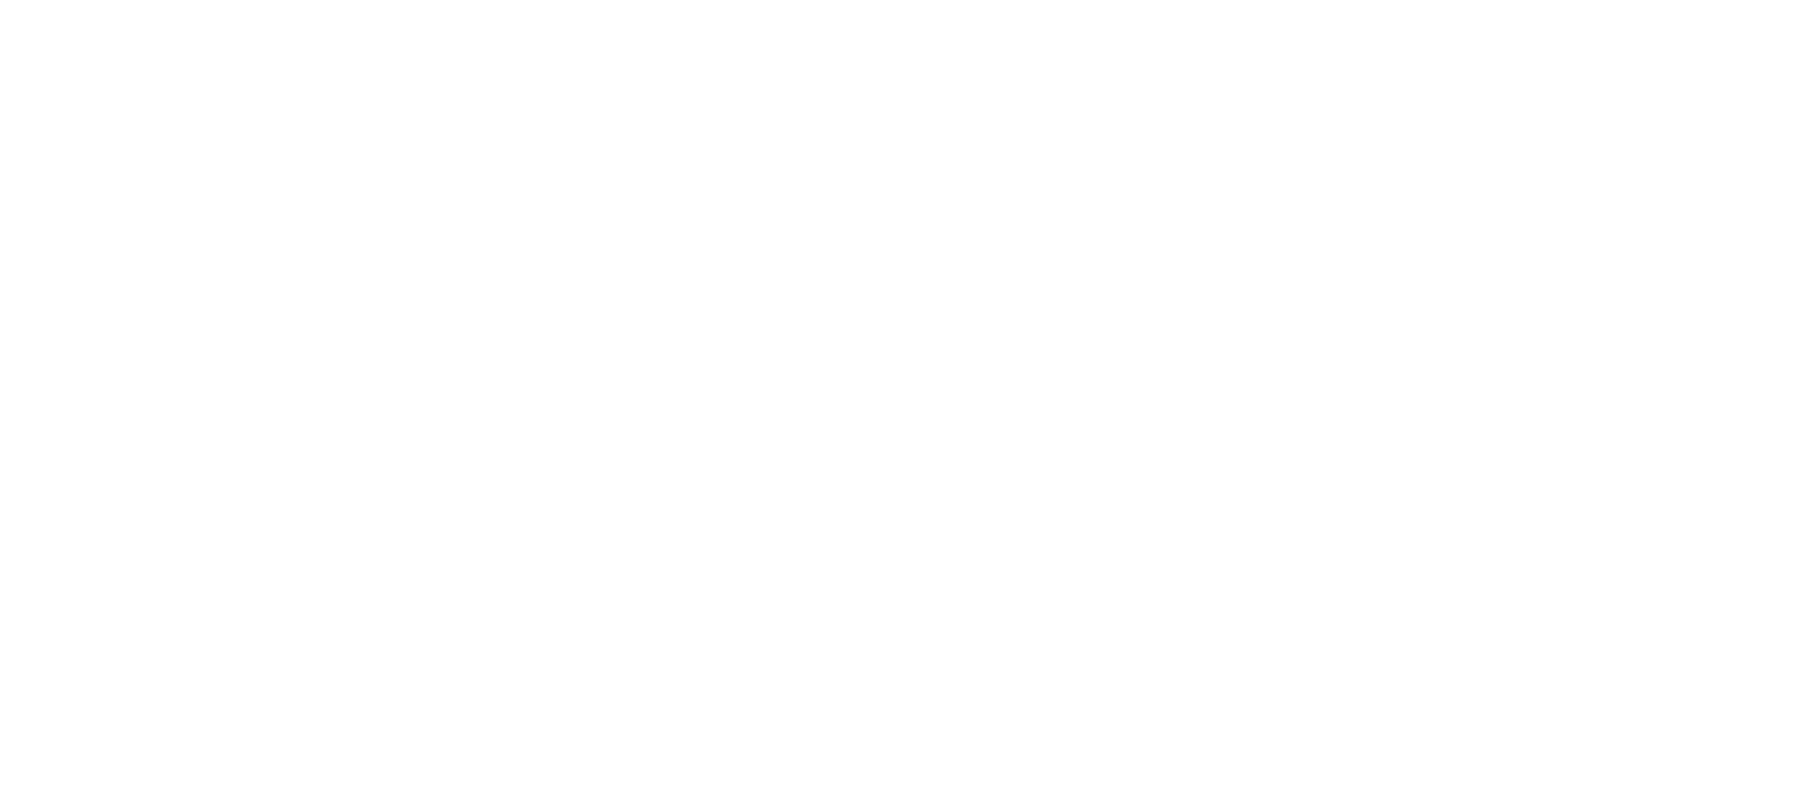 Essence Cannabis Dispensary